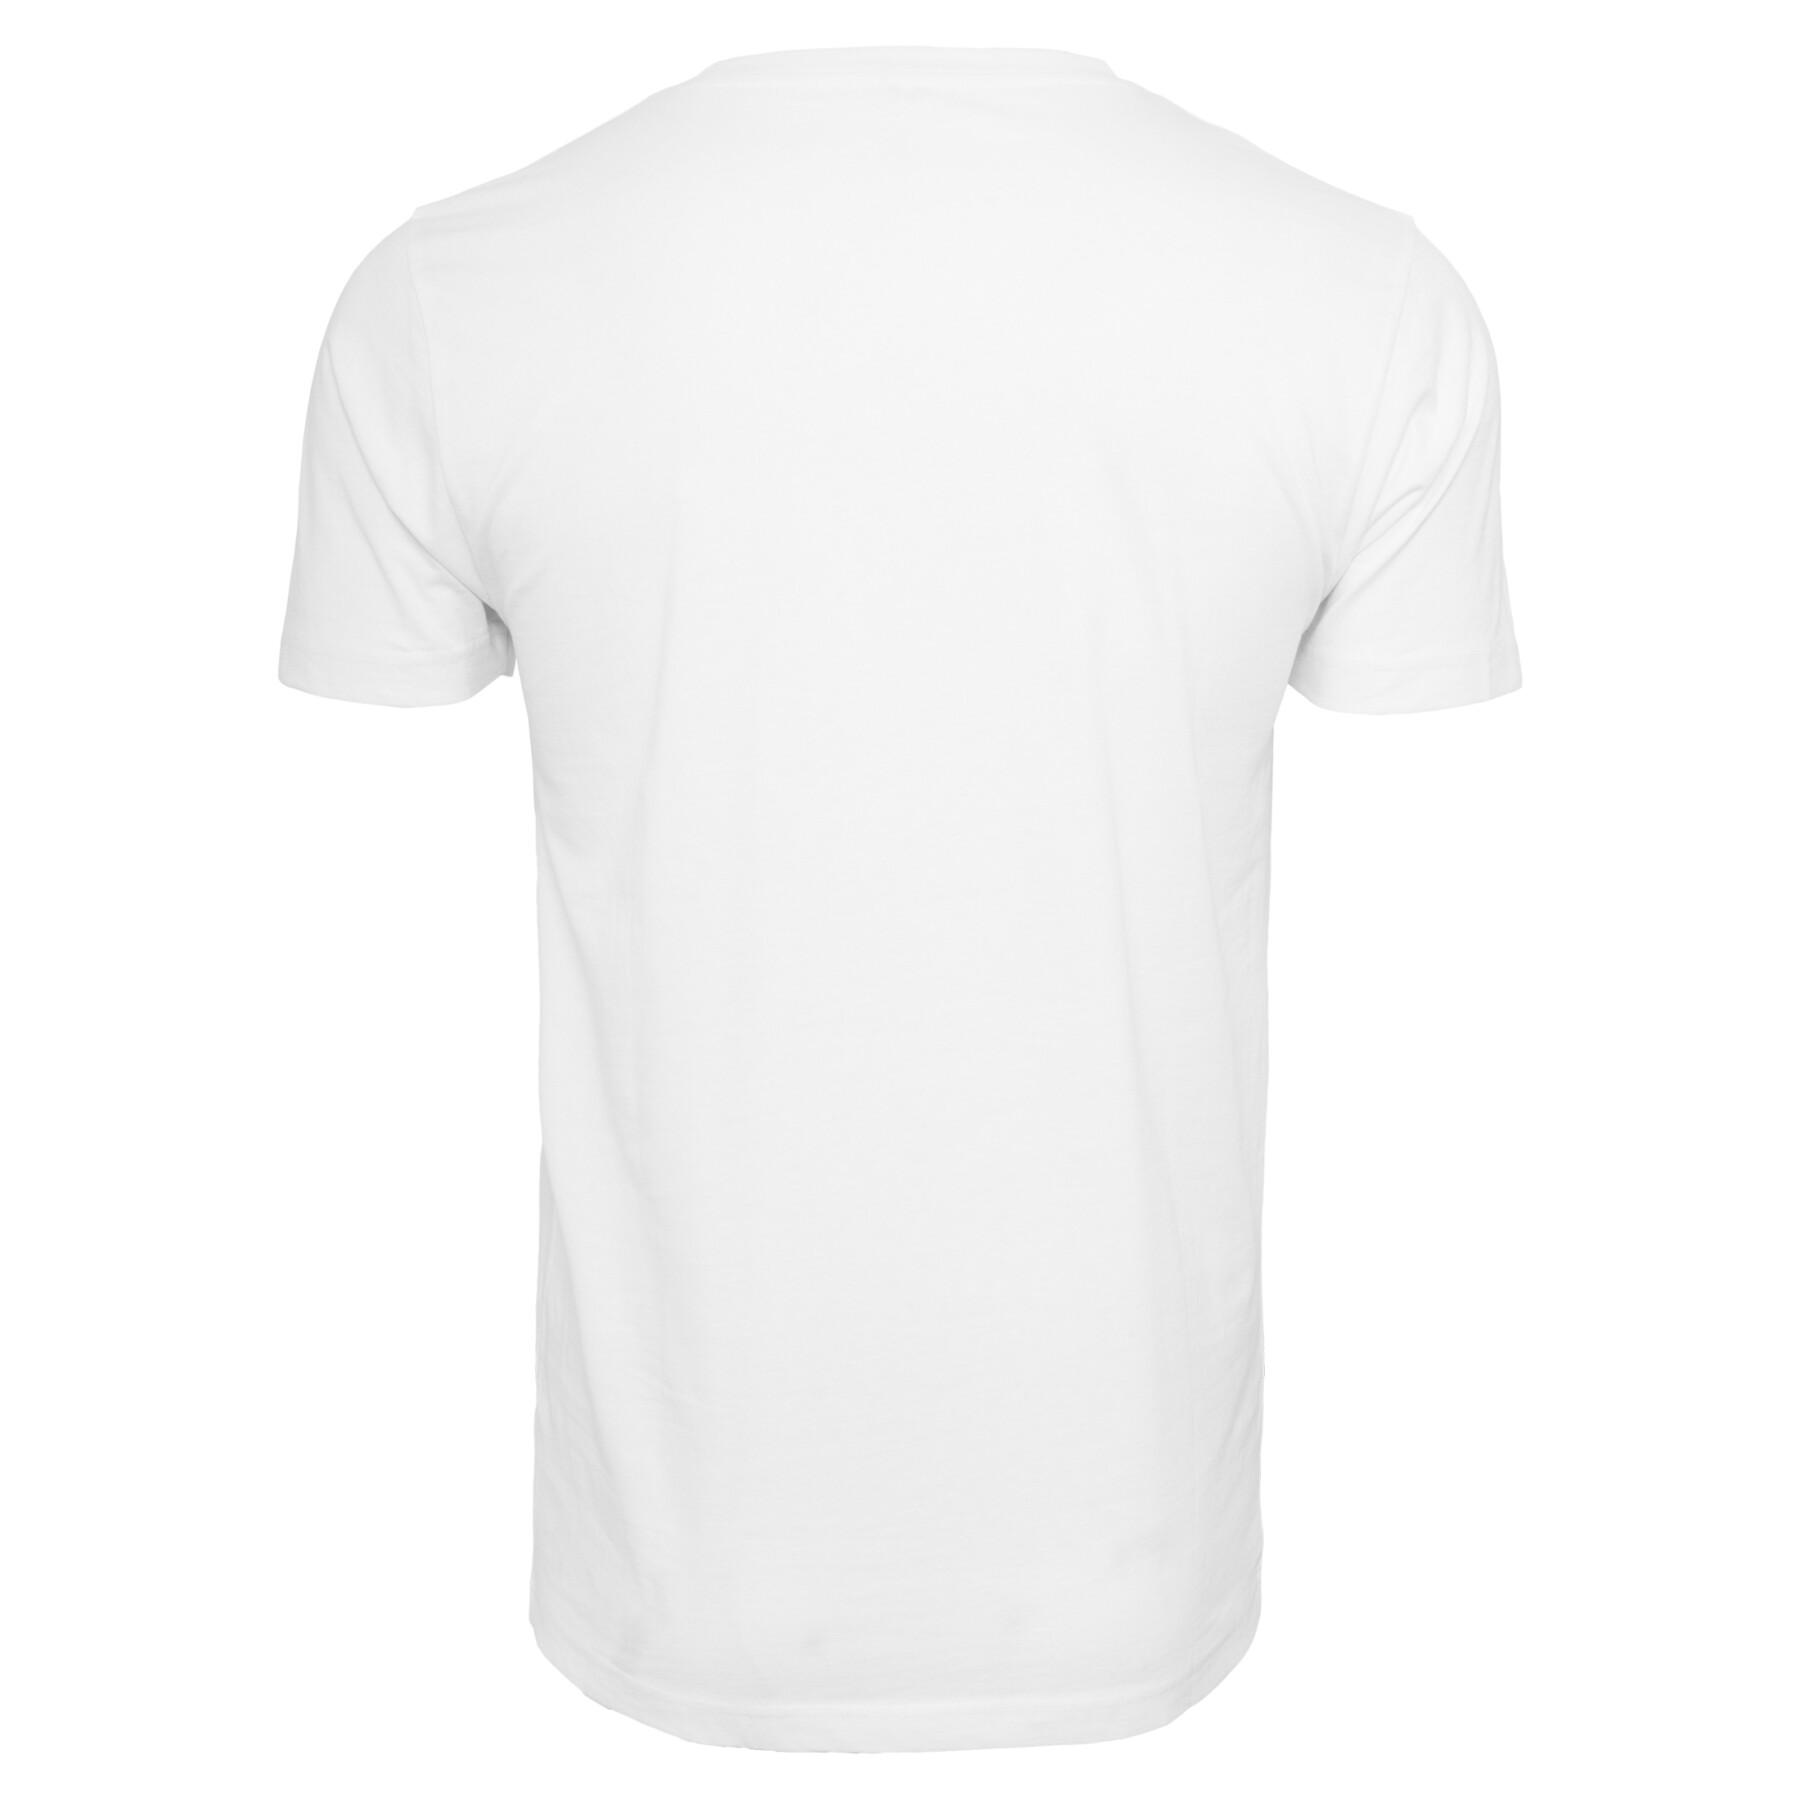 Camiseta Mister Tee bla-and-white inignia